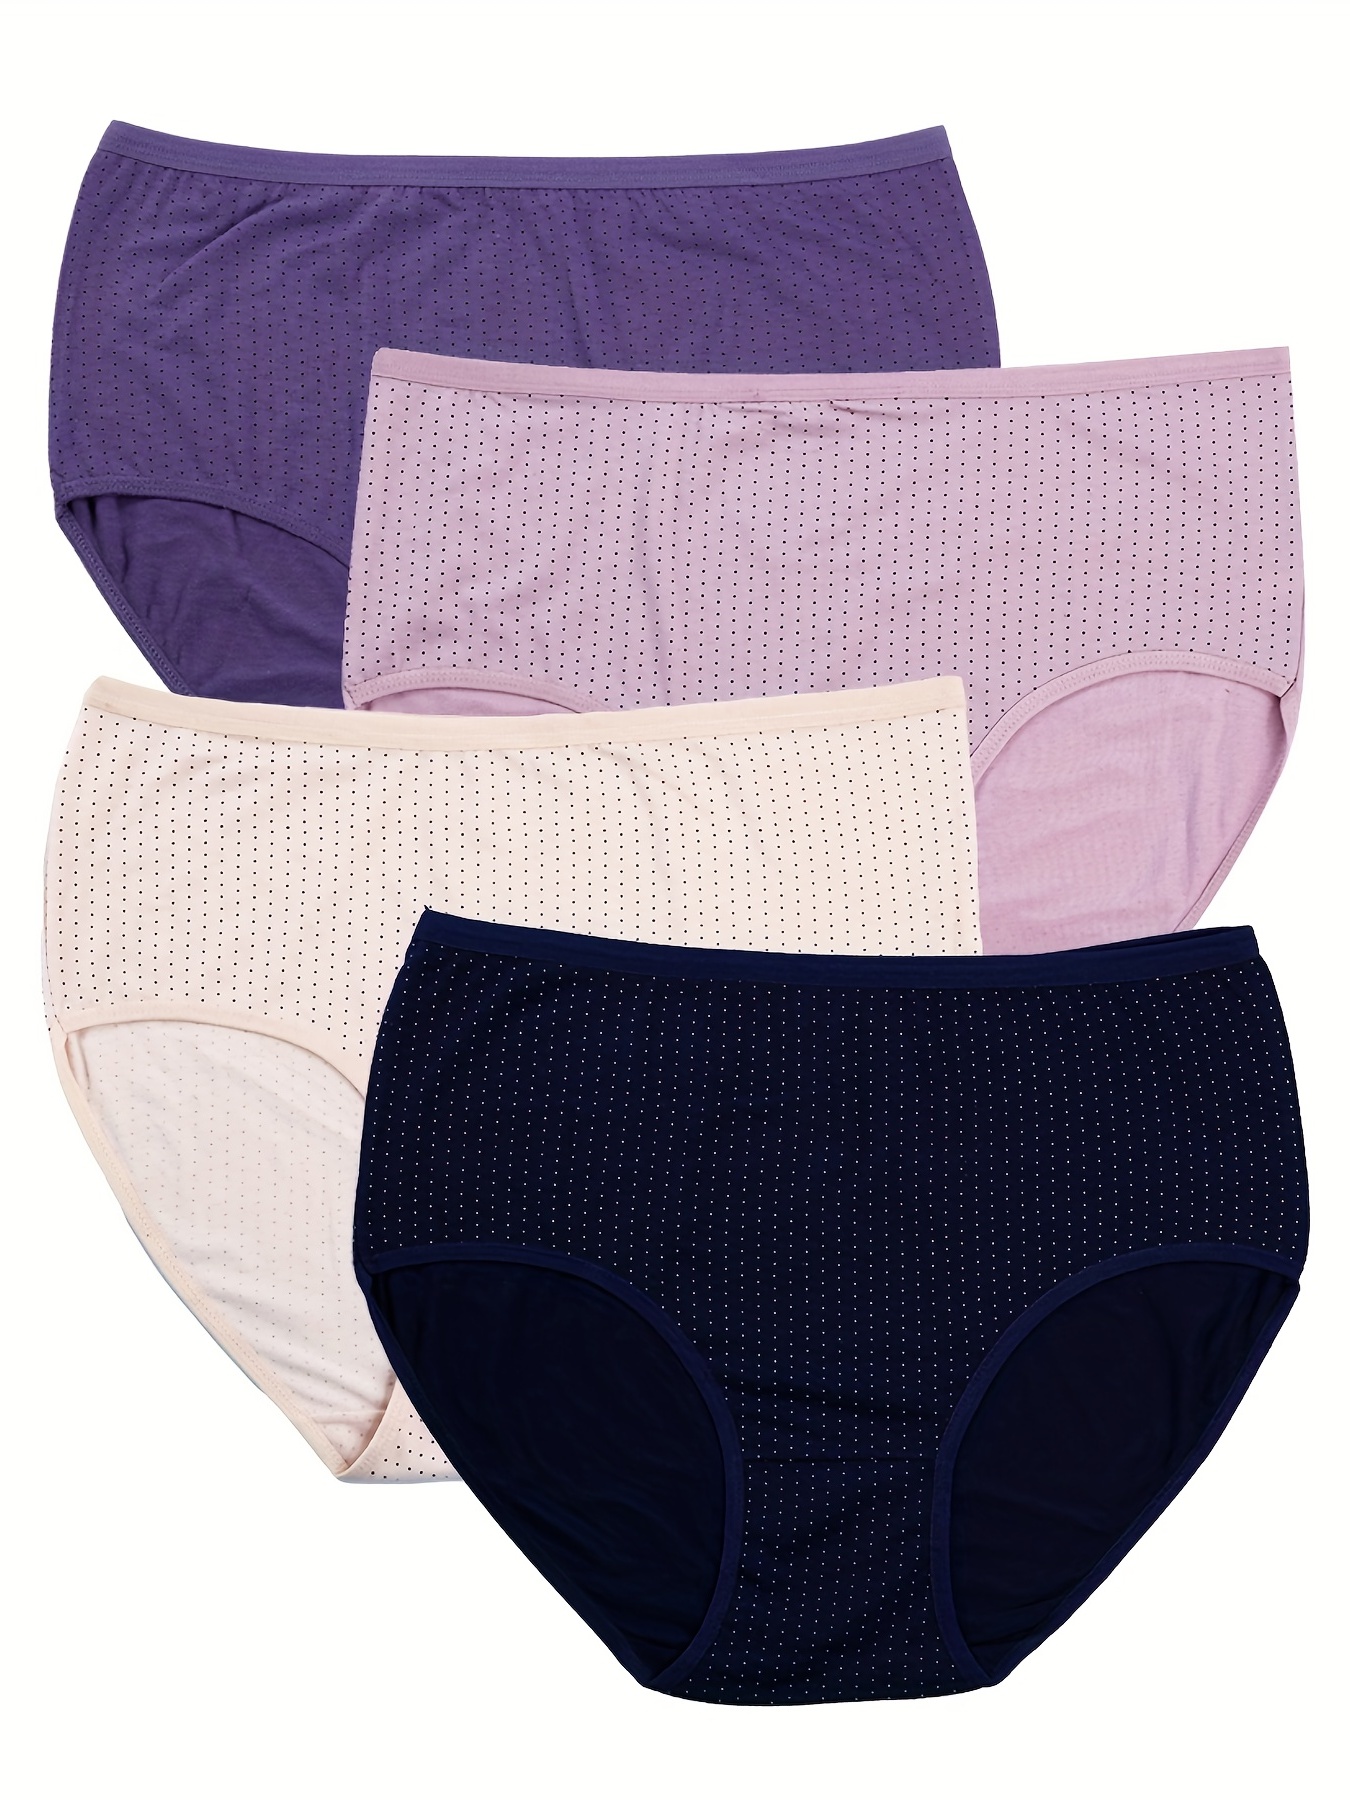 Hanes Women's Underwear Pack, High-Waisted Cotton Brief Panties